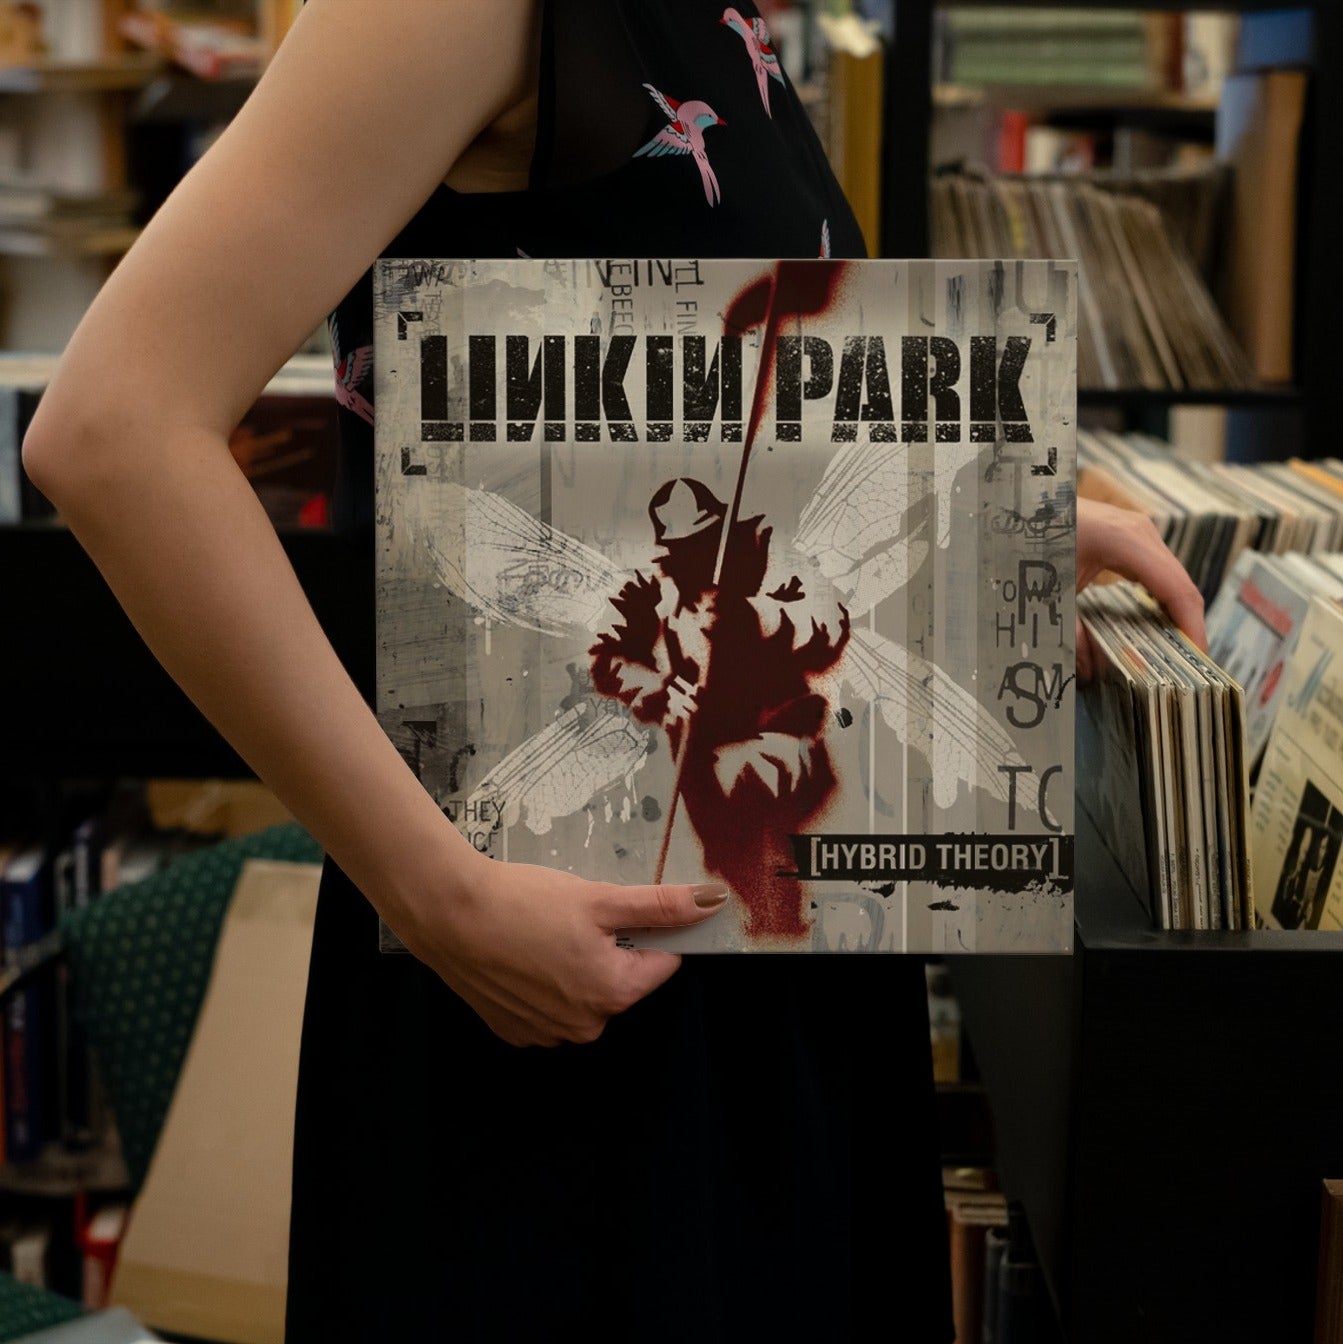 Linkin Park: Hybrid Theory Vinyl LP